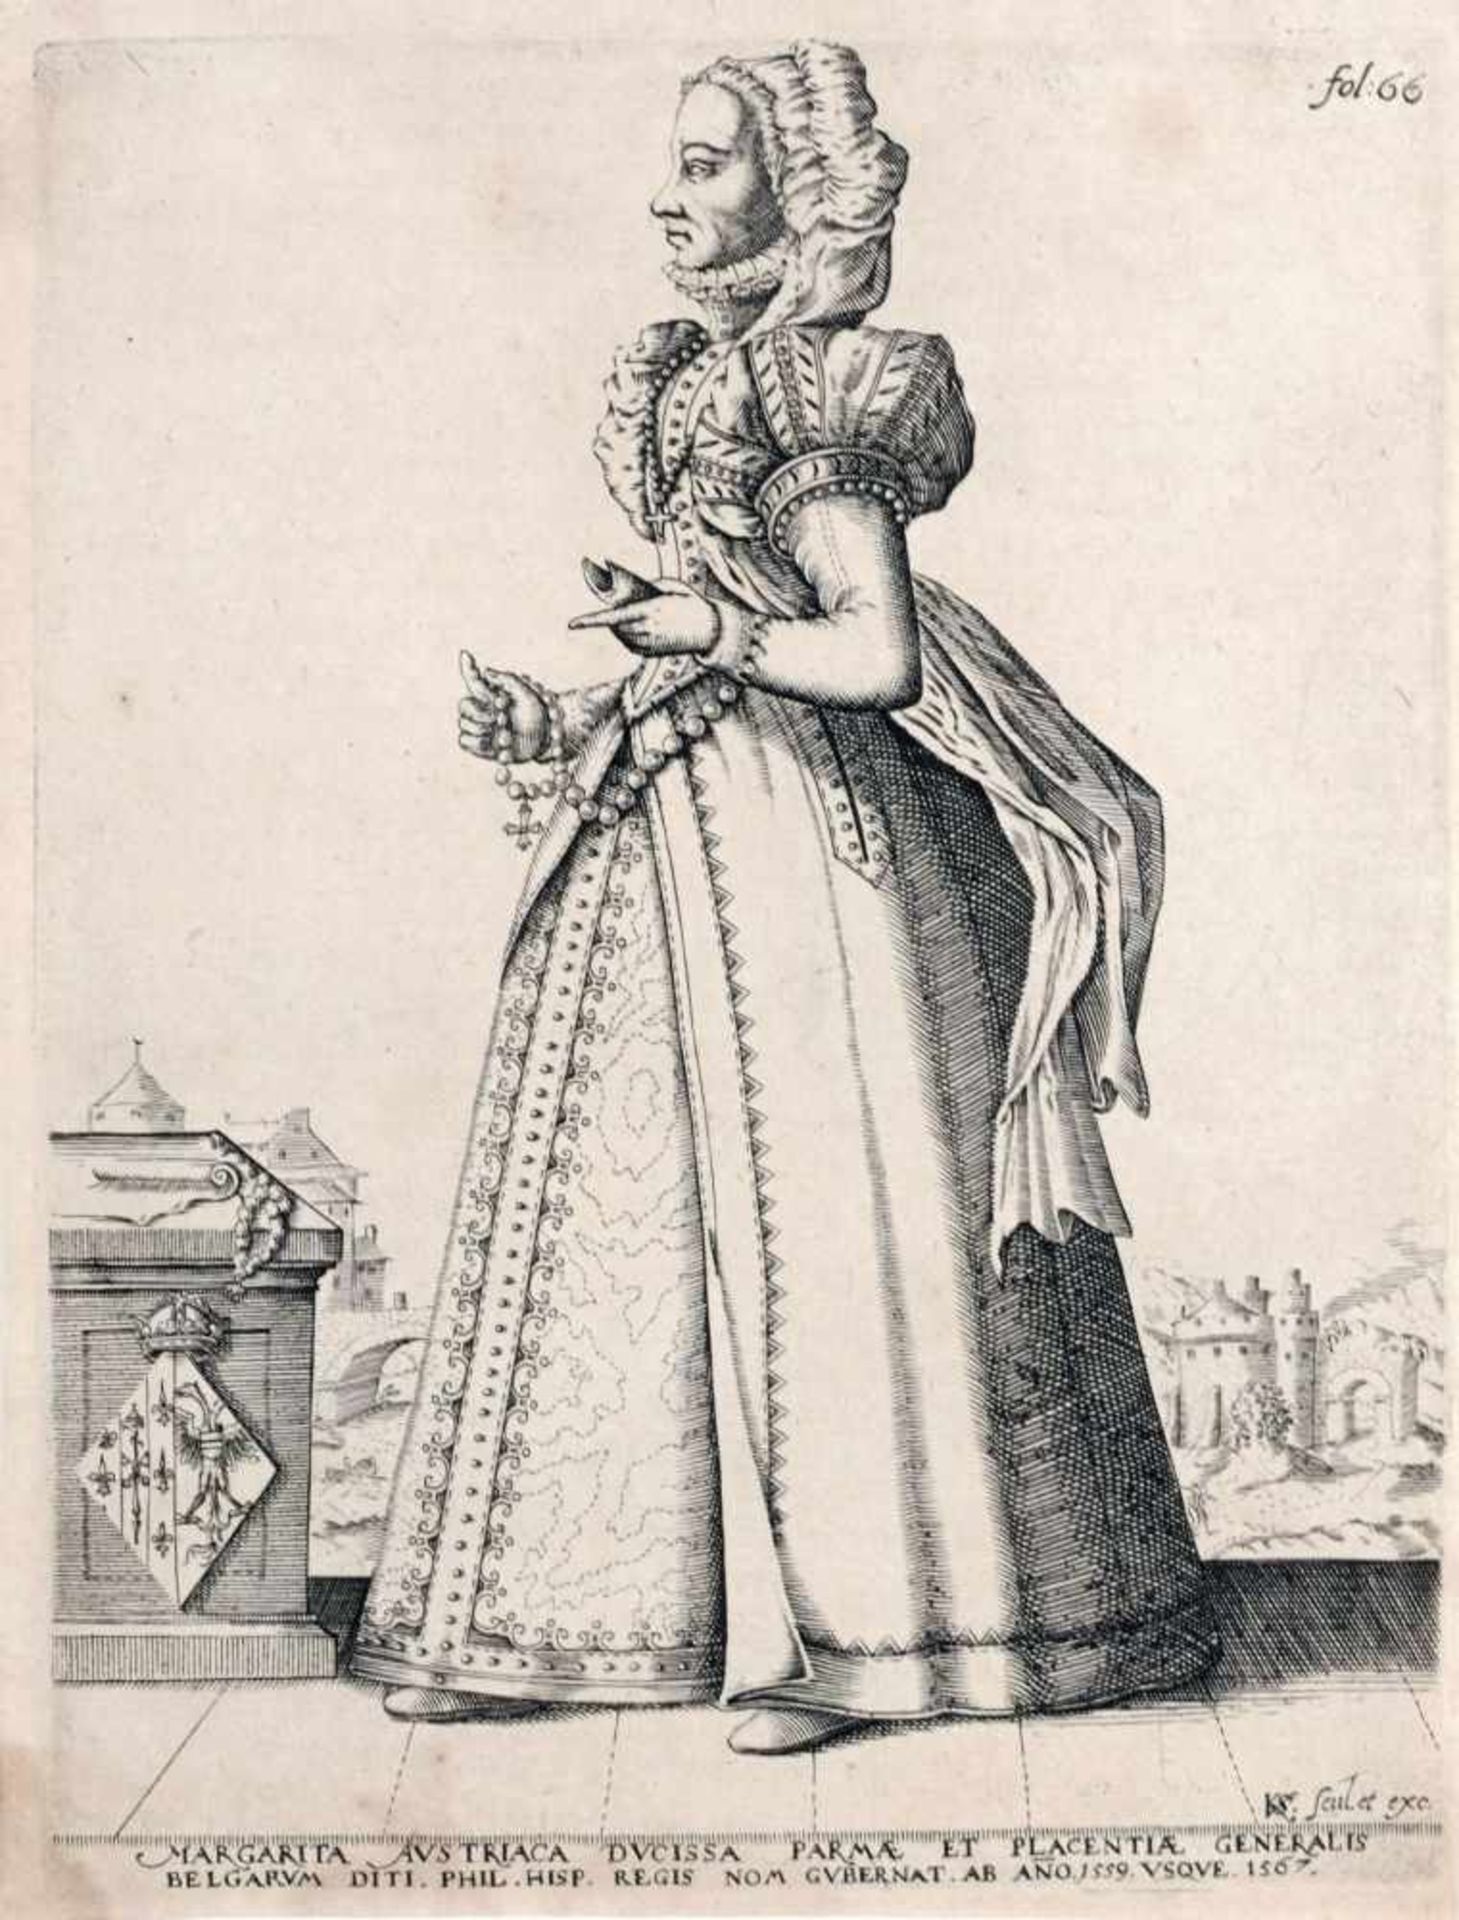 Christophe I van Sichem "Margarita Austriaca Ducissa Parmae". Frühes 17. Jh.Christophe I van